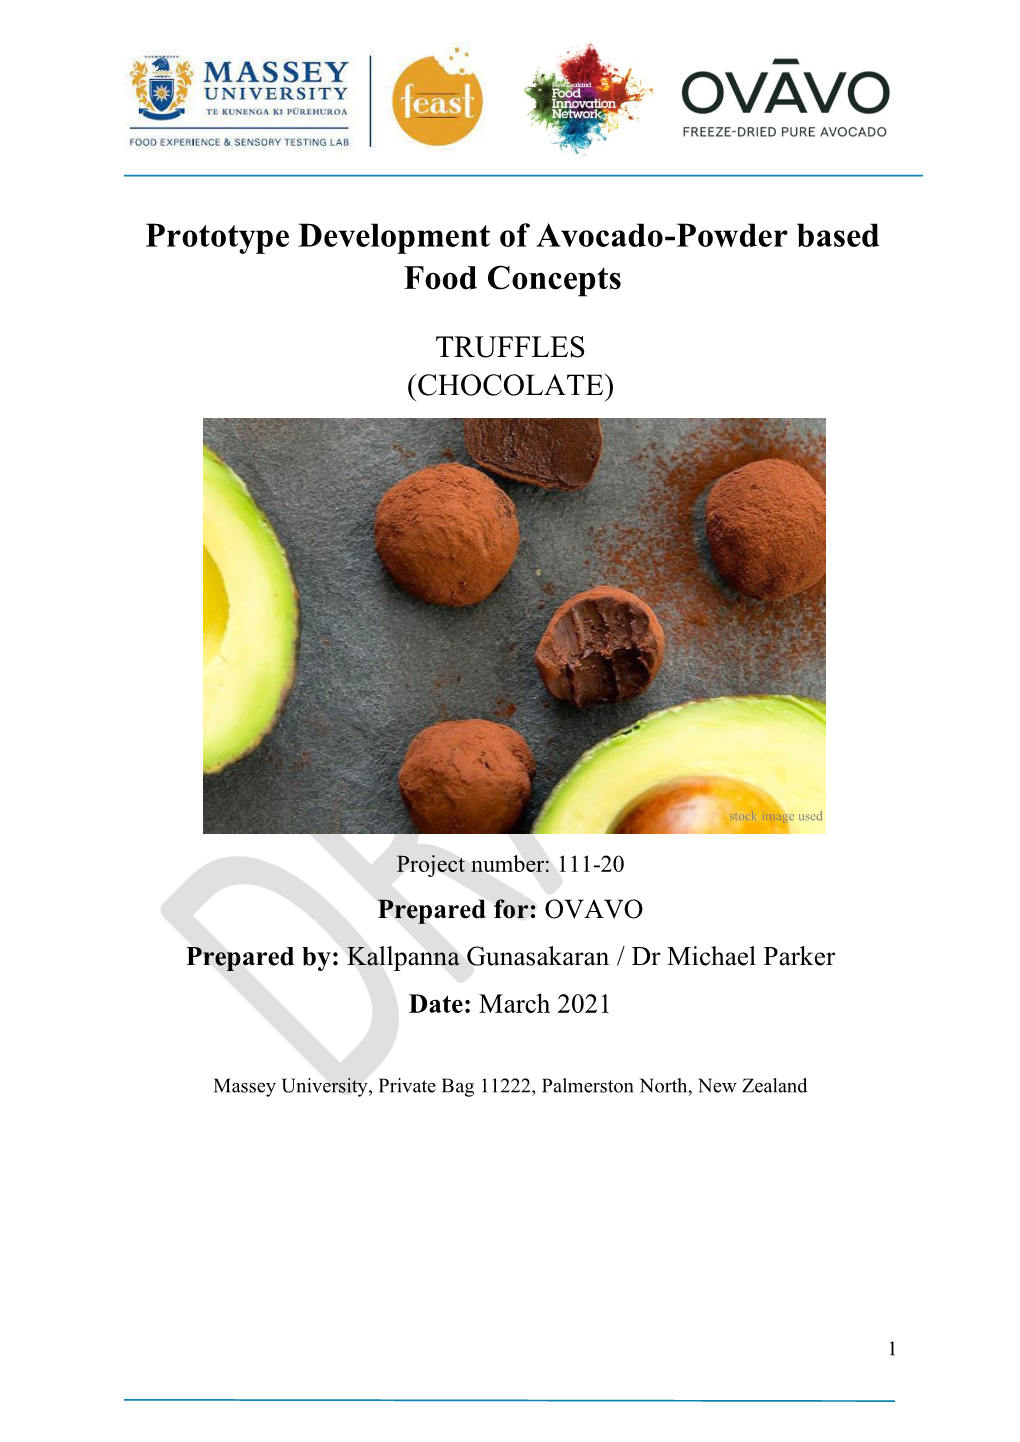 Prototype Development of Avocado-Powder Based Food Concepts